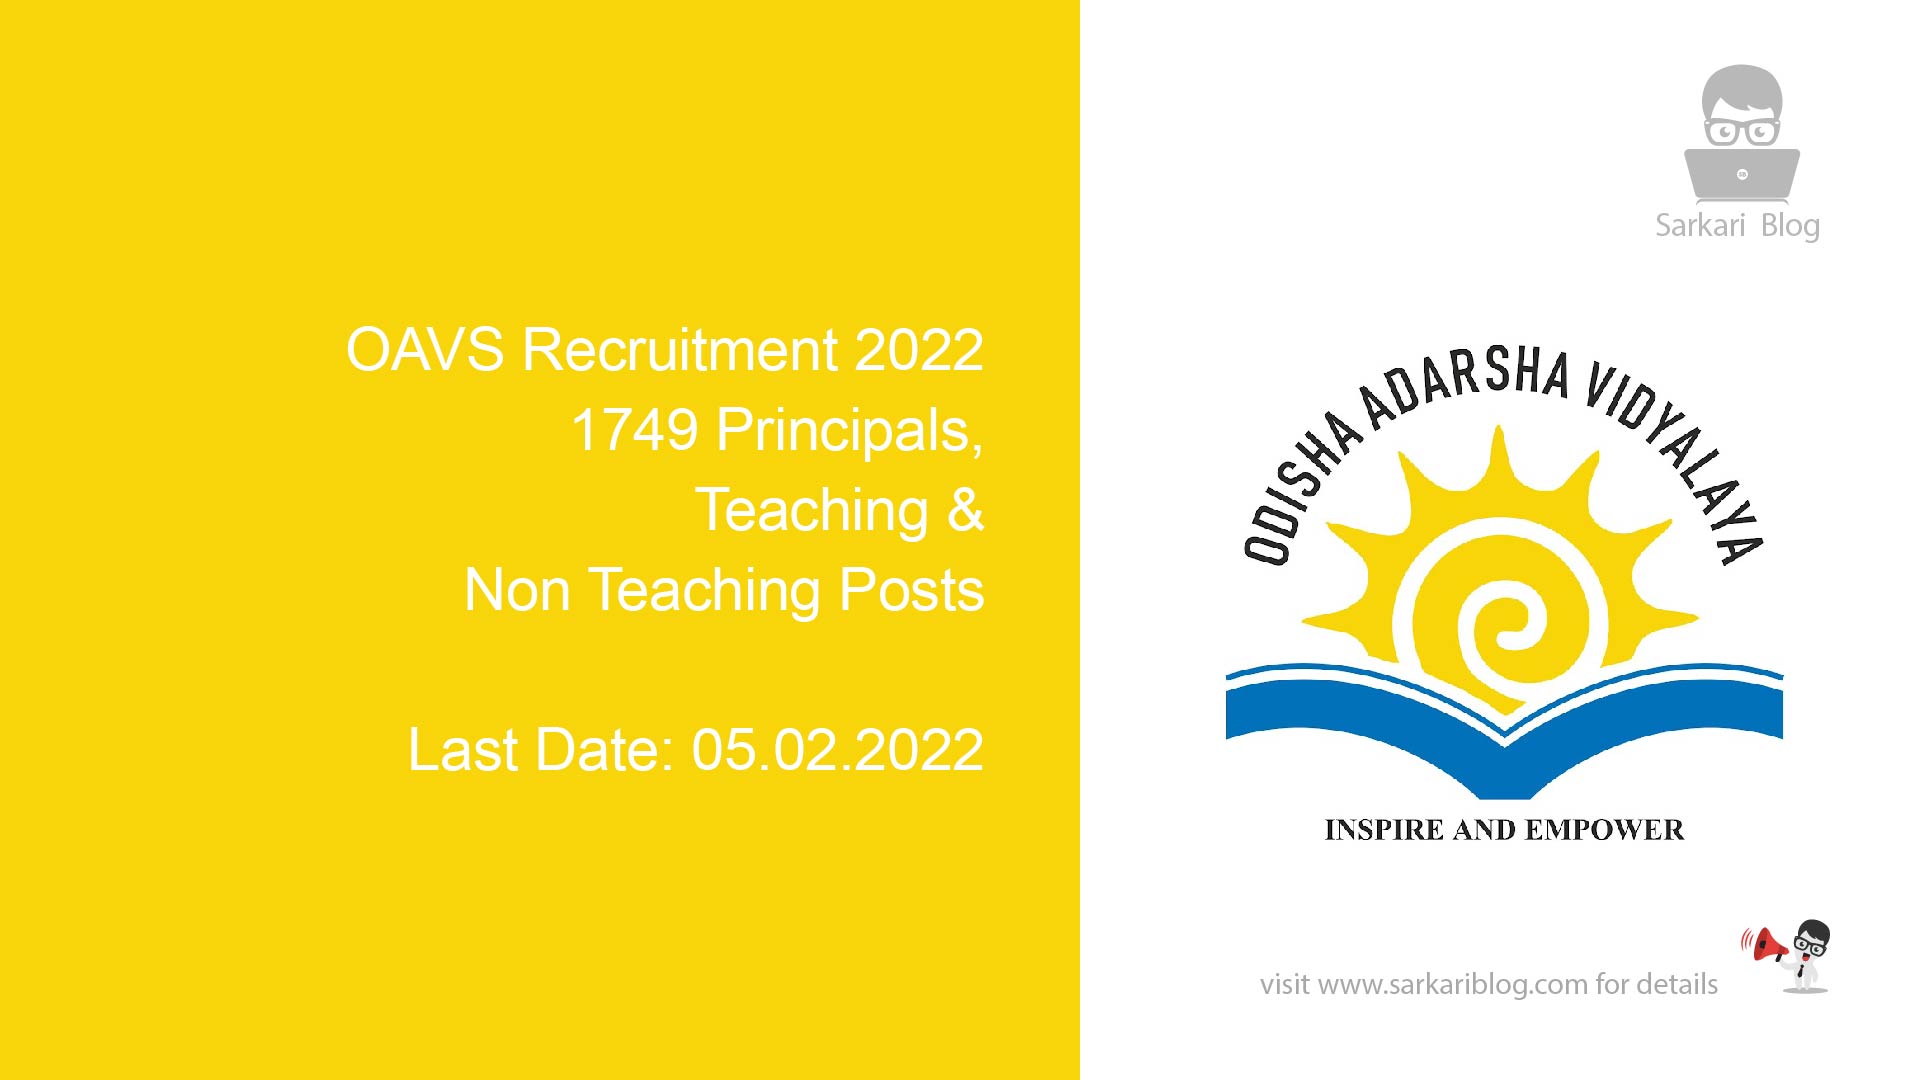 OAVS Recruitment 2022